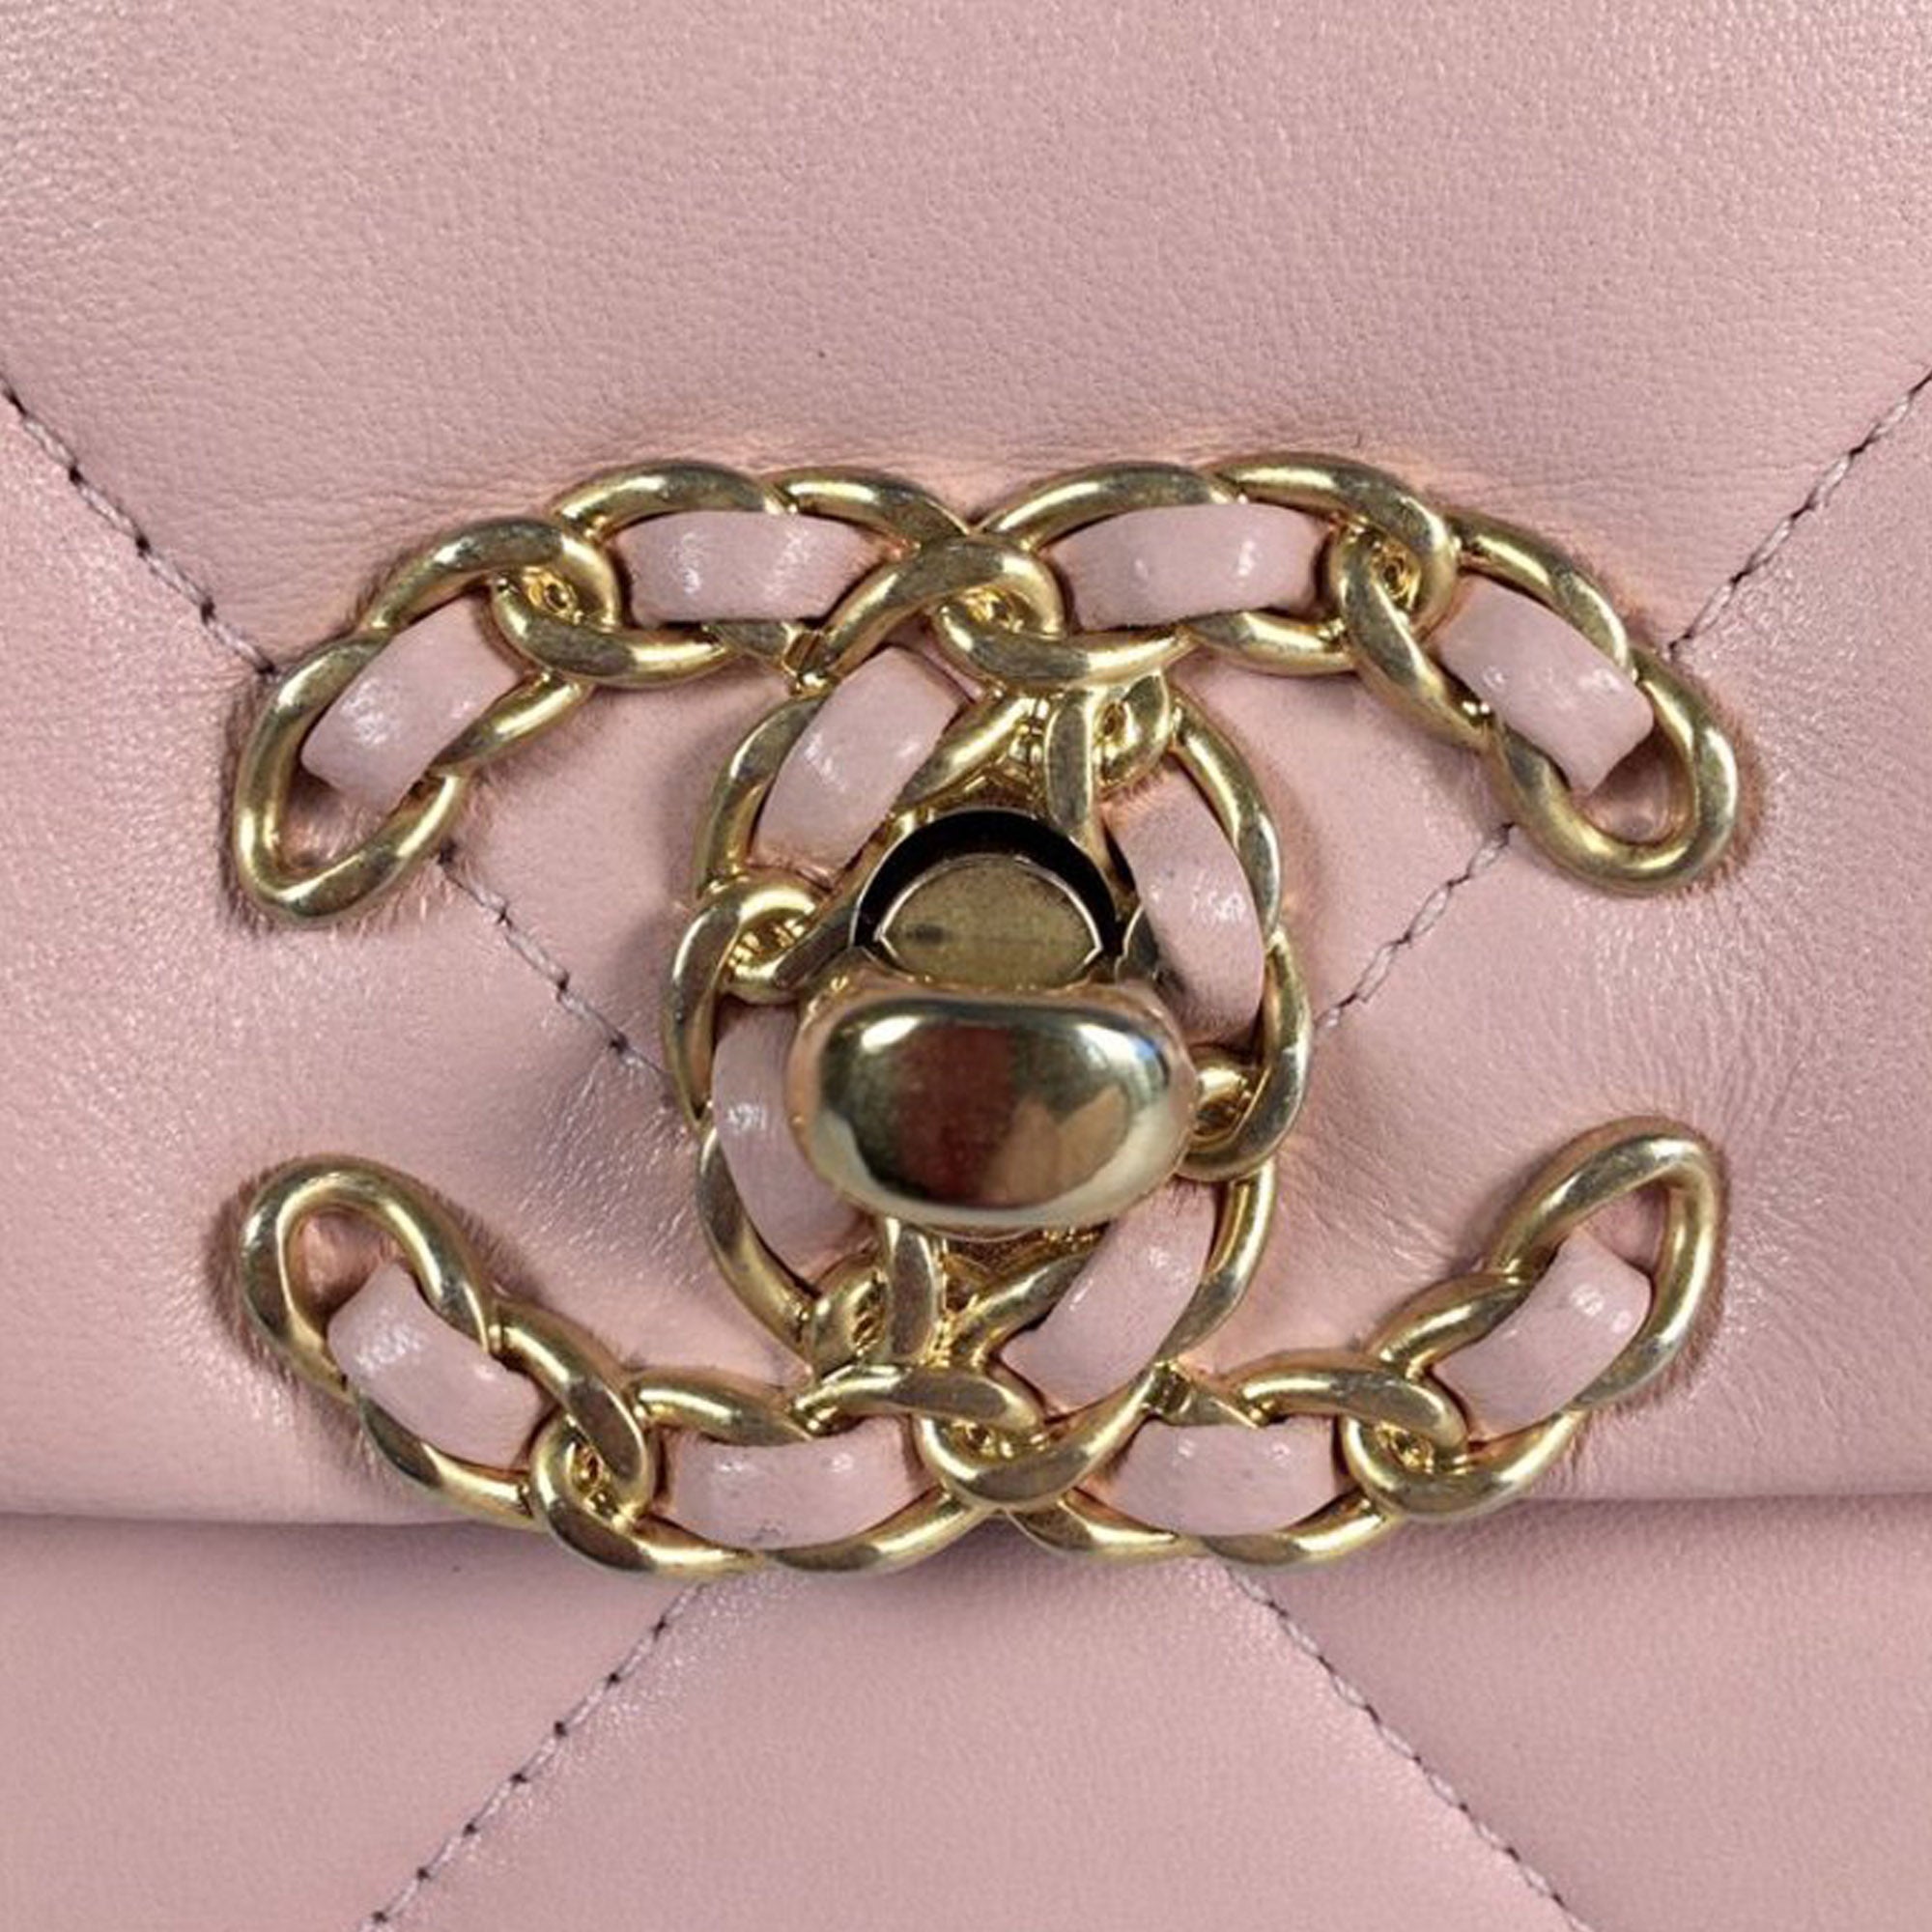 Pink Chanel Medium Lambskin 19 Flap Bag